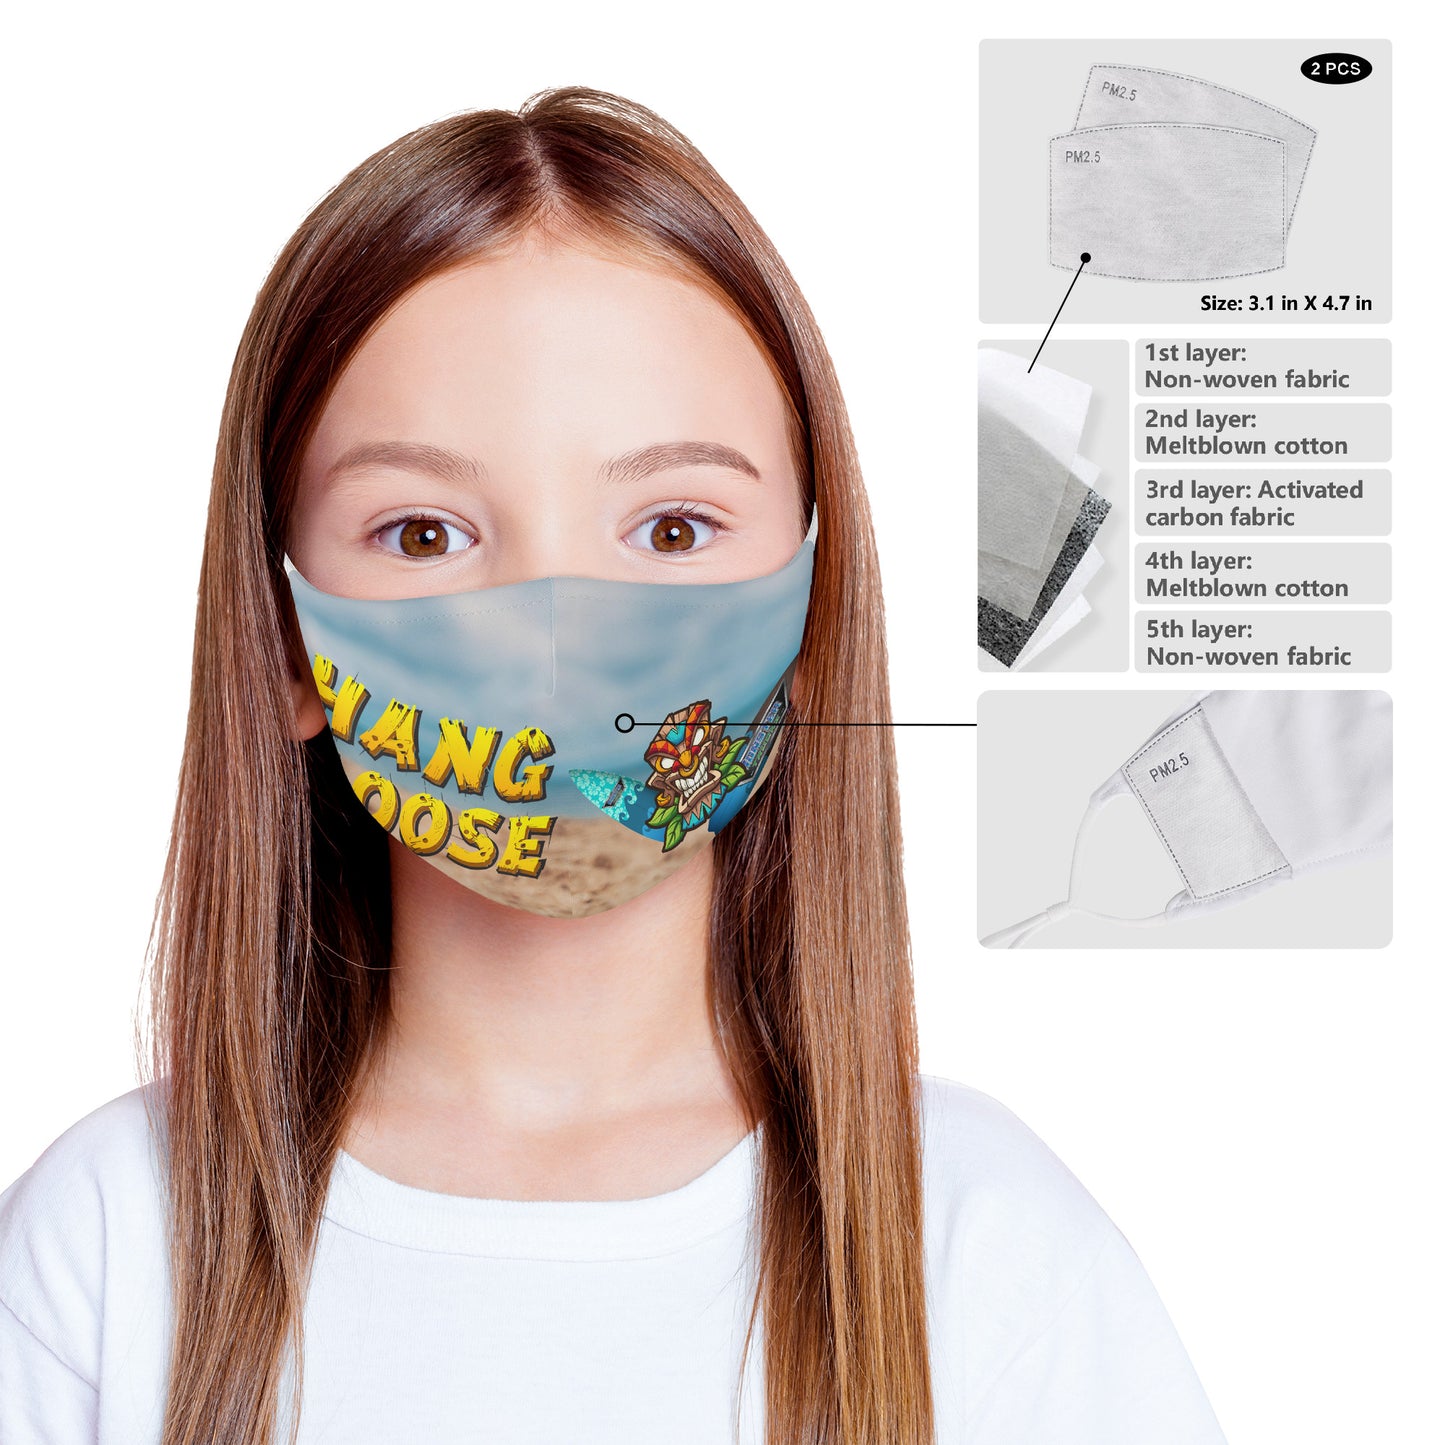 Hang Loose Kids Respirator Mask